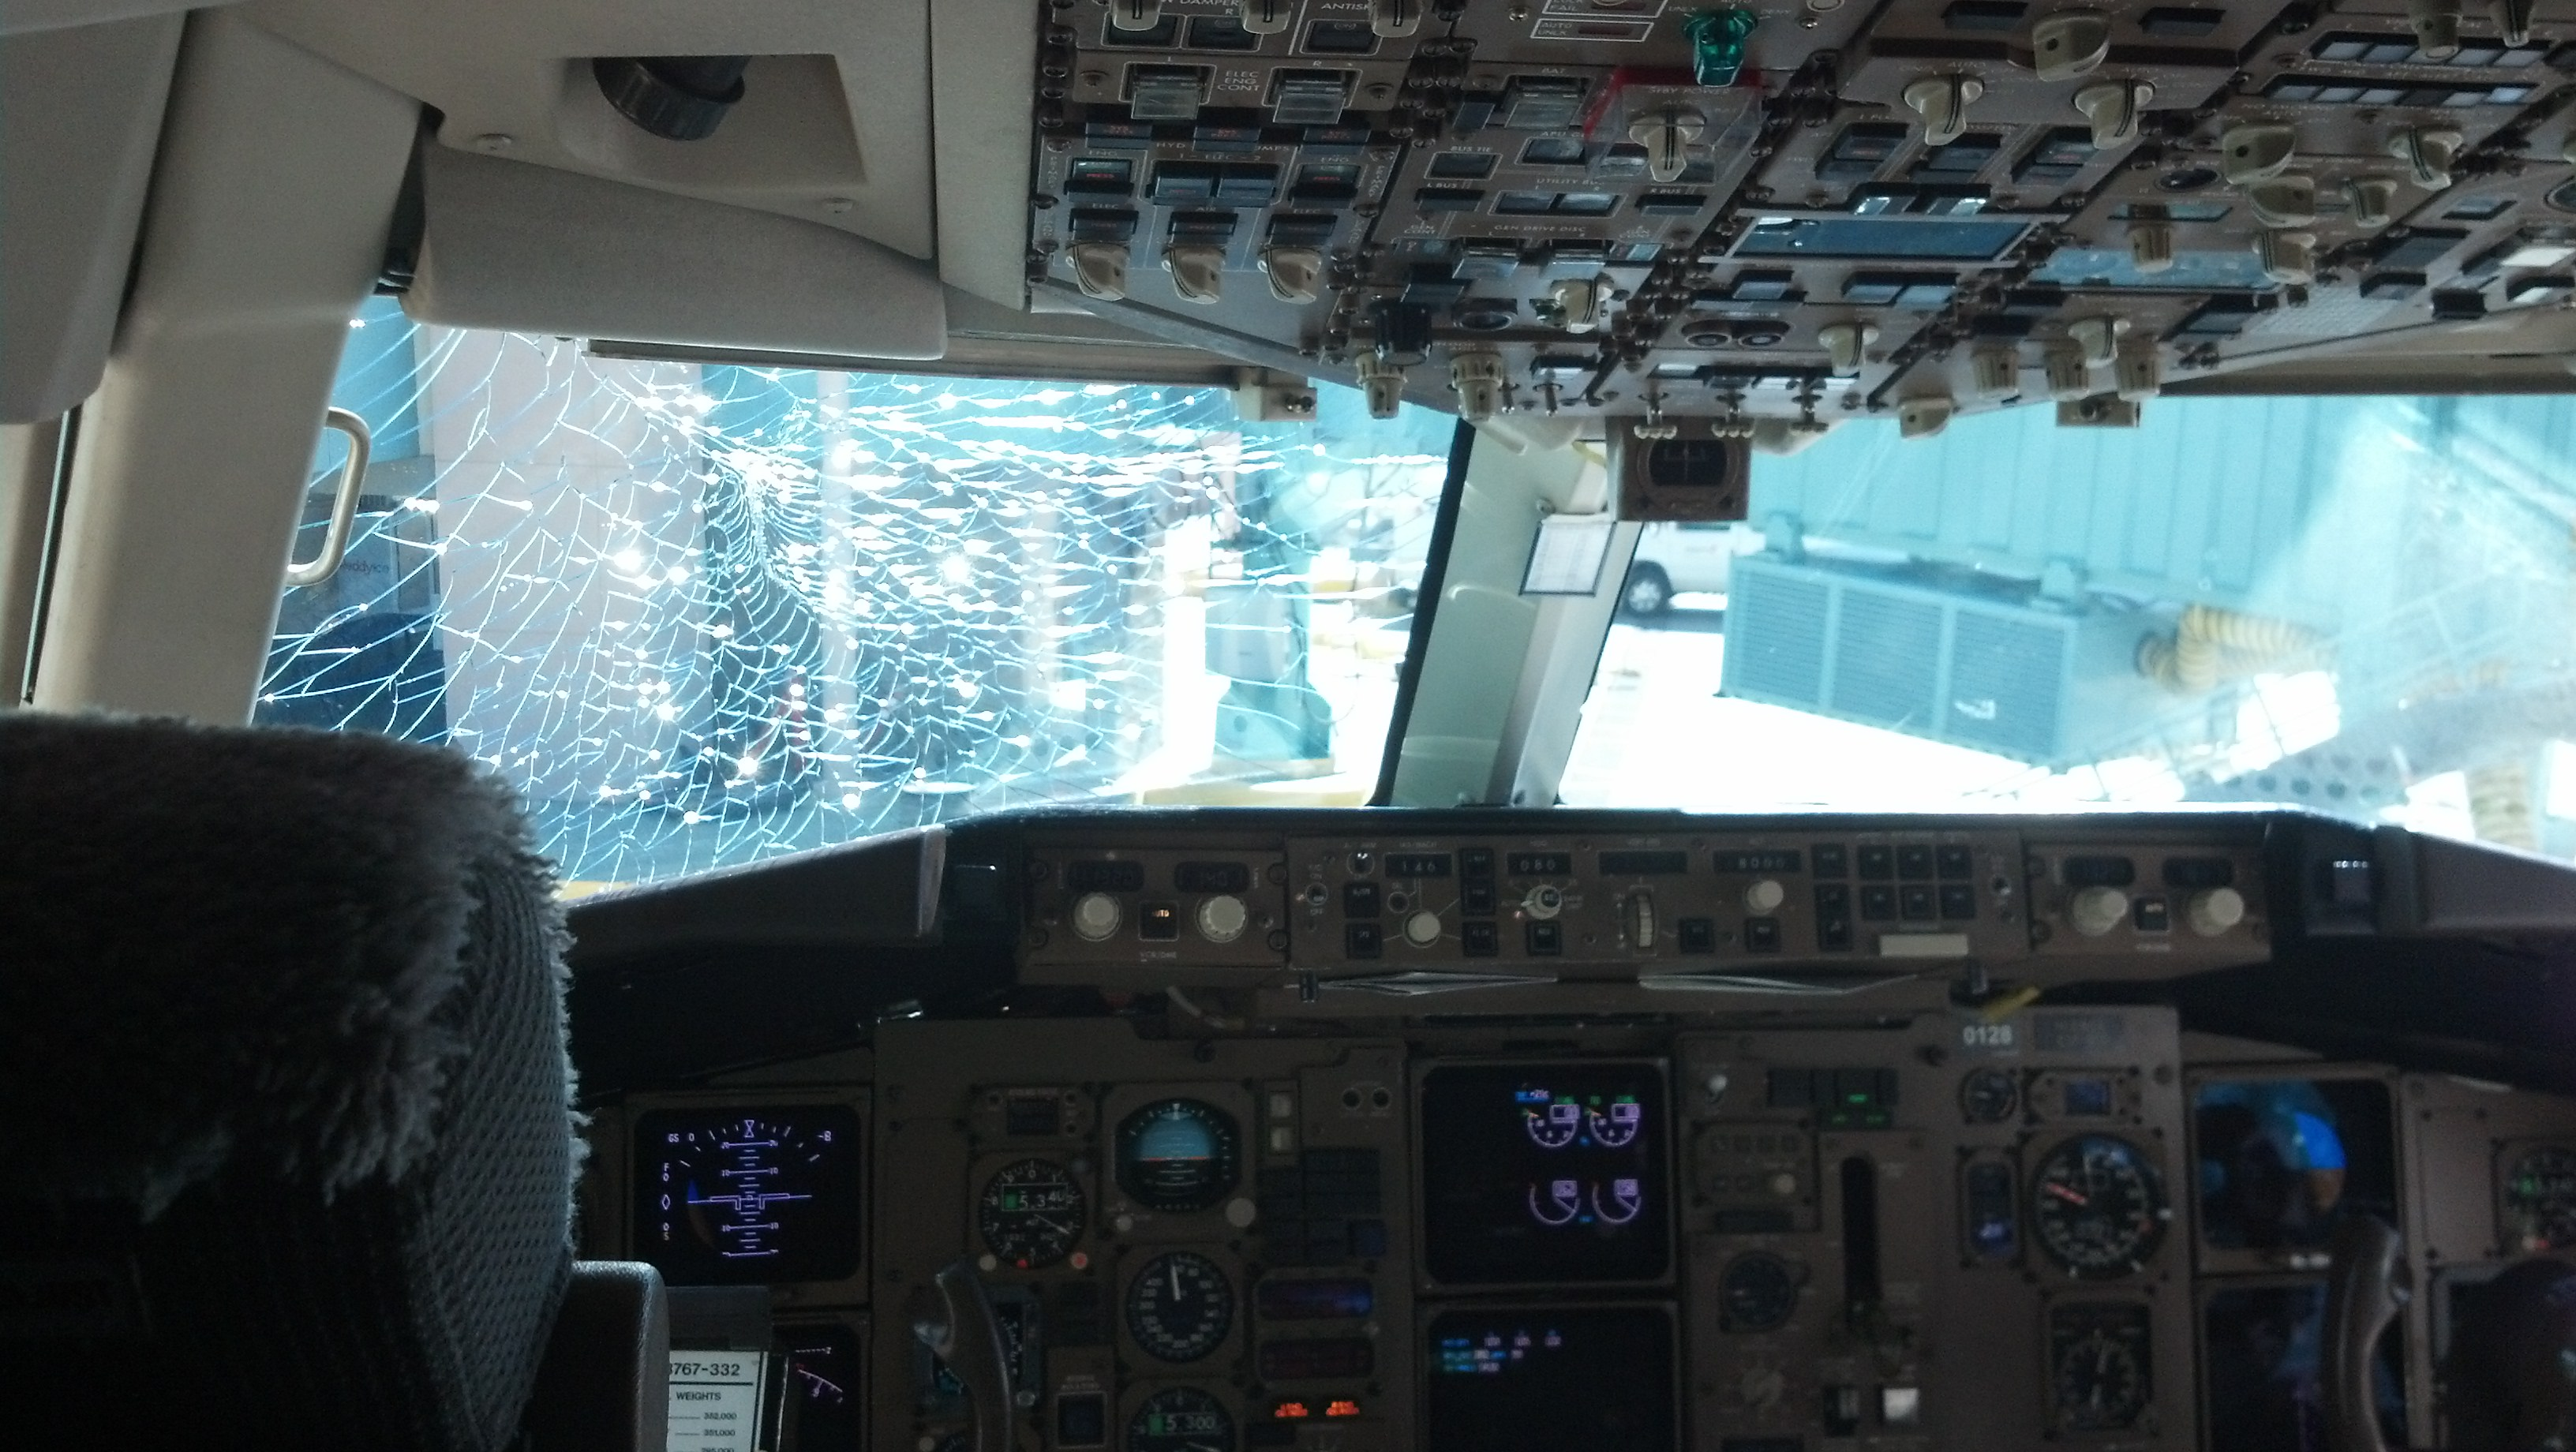 Delhi to Guwahati flight diverted to Jaipur after windshield cracks